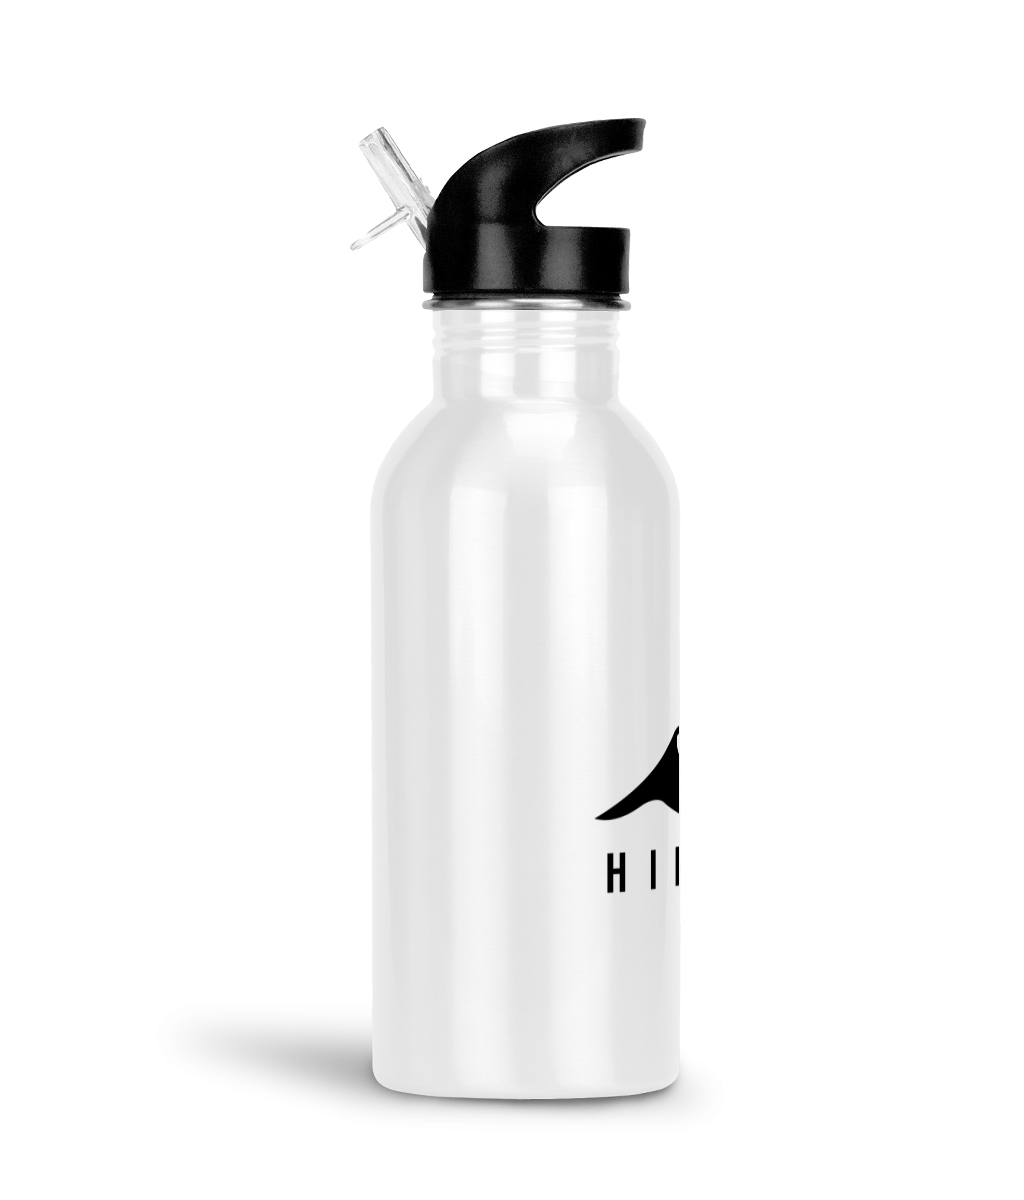 Hillbound Aluminium 600ml Water Bottle